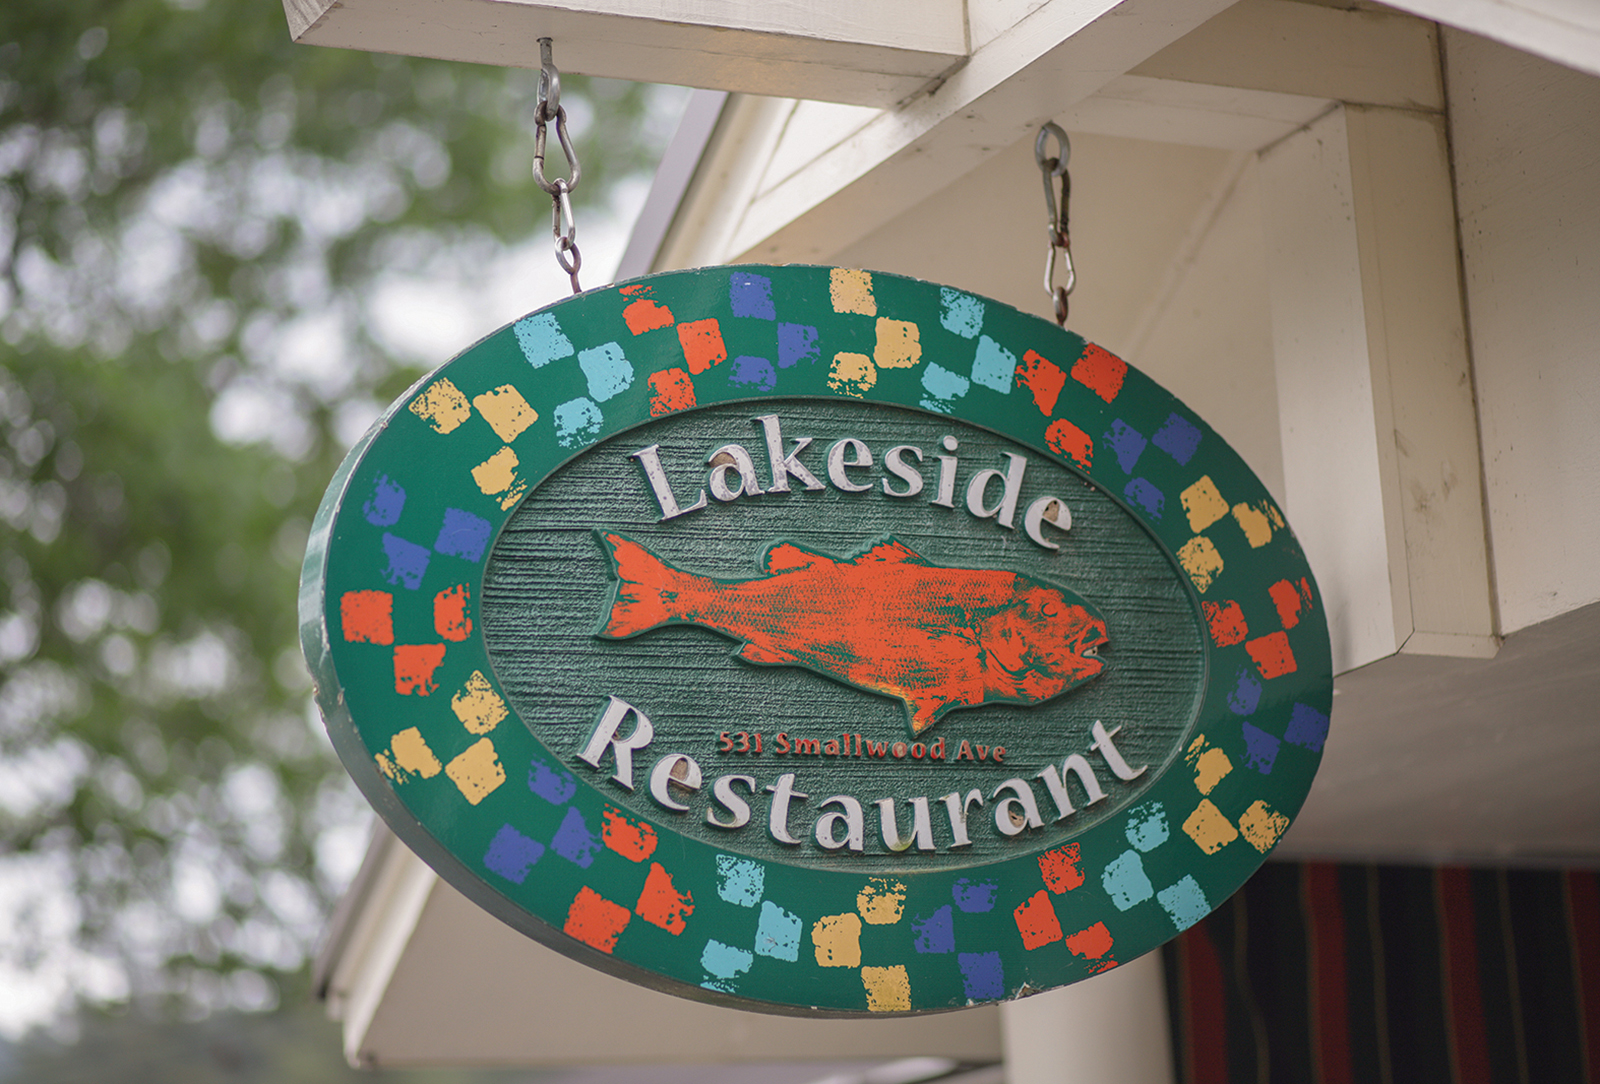 lakeside restaurant sign highlands nc